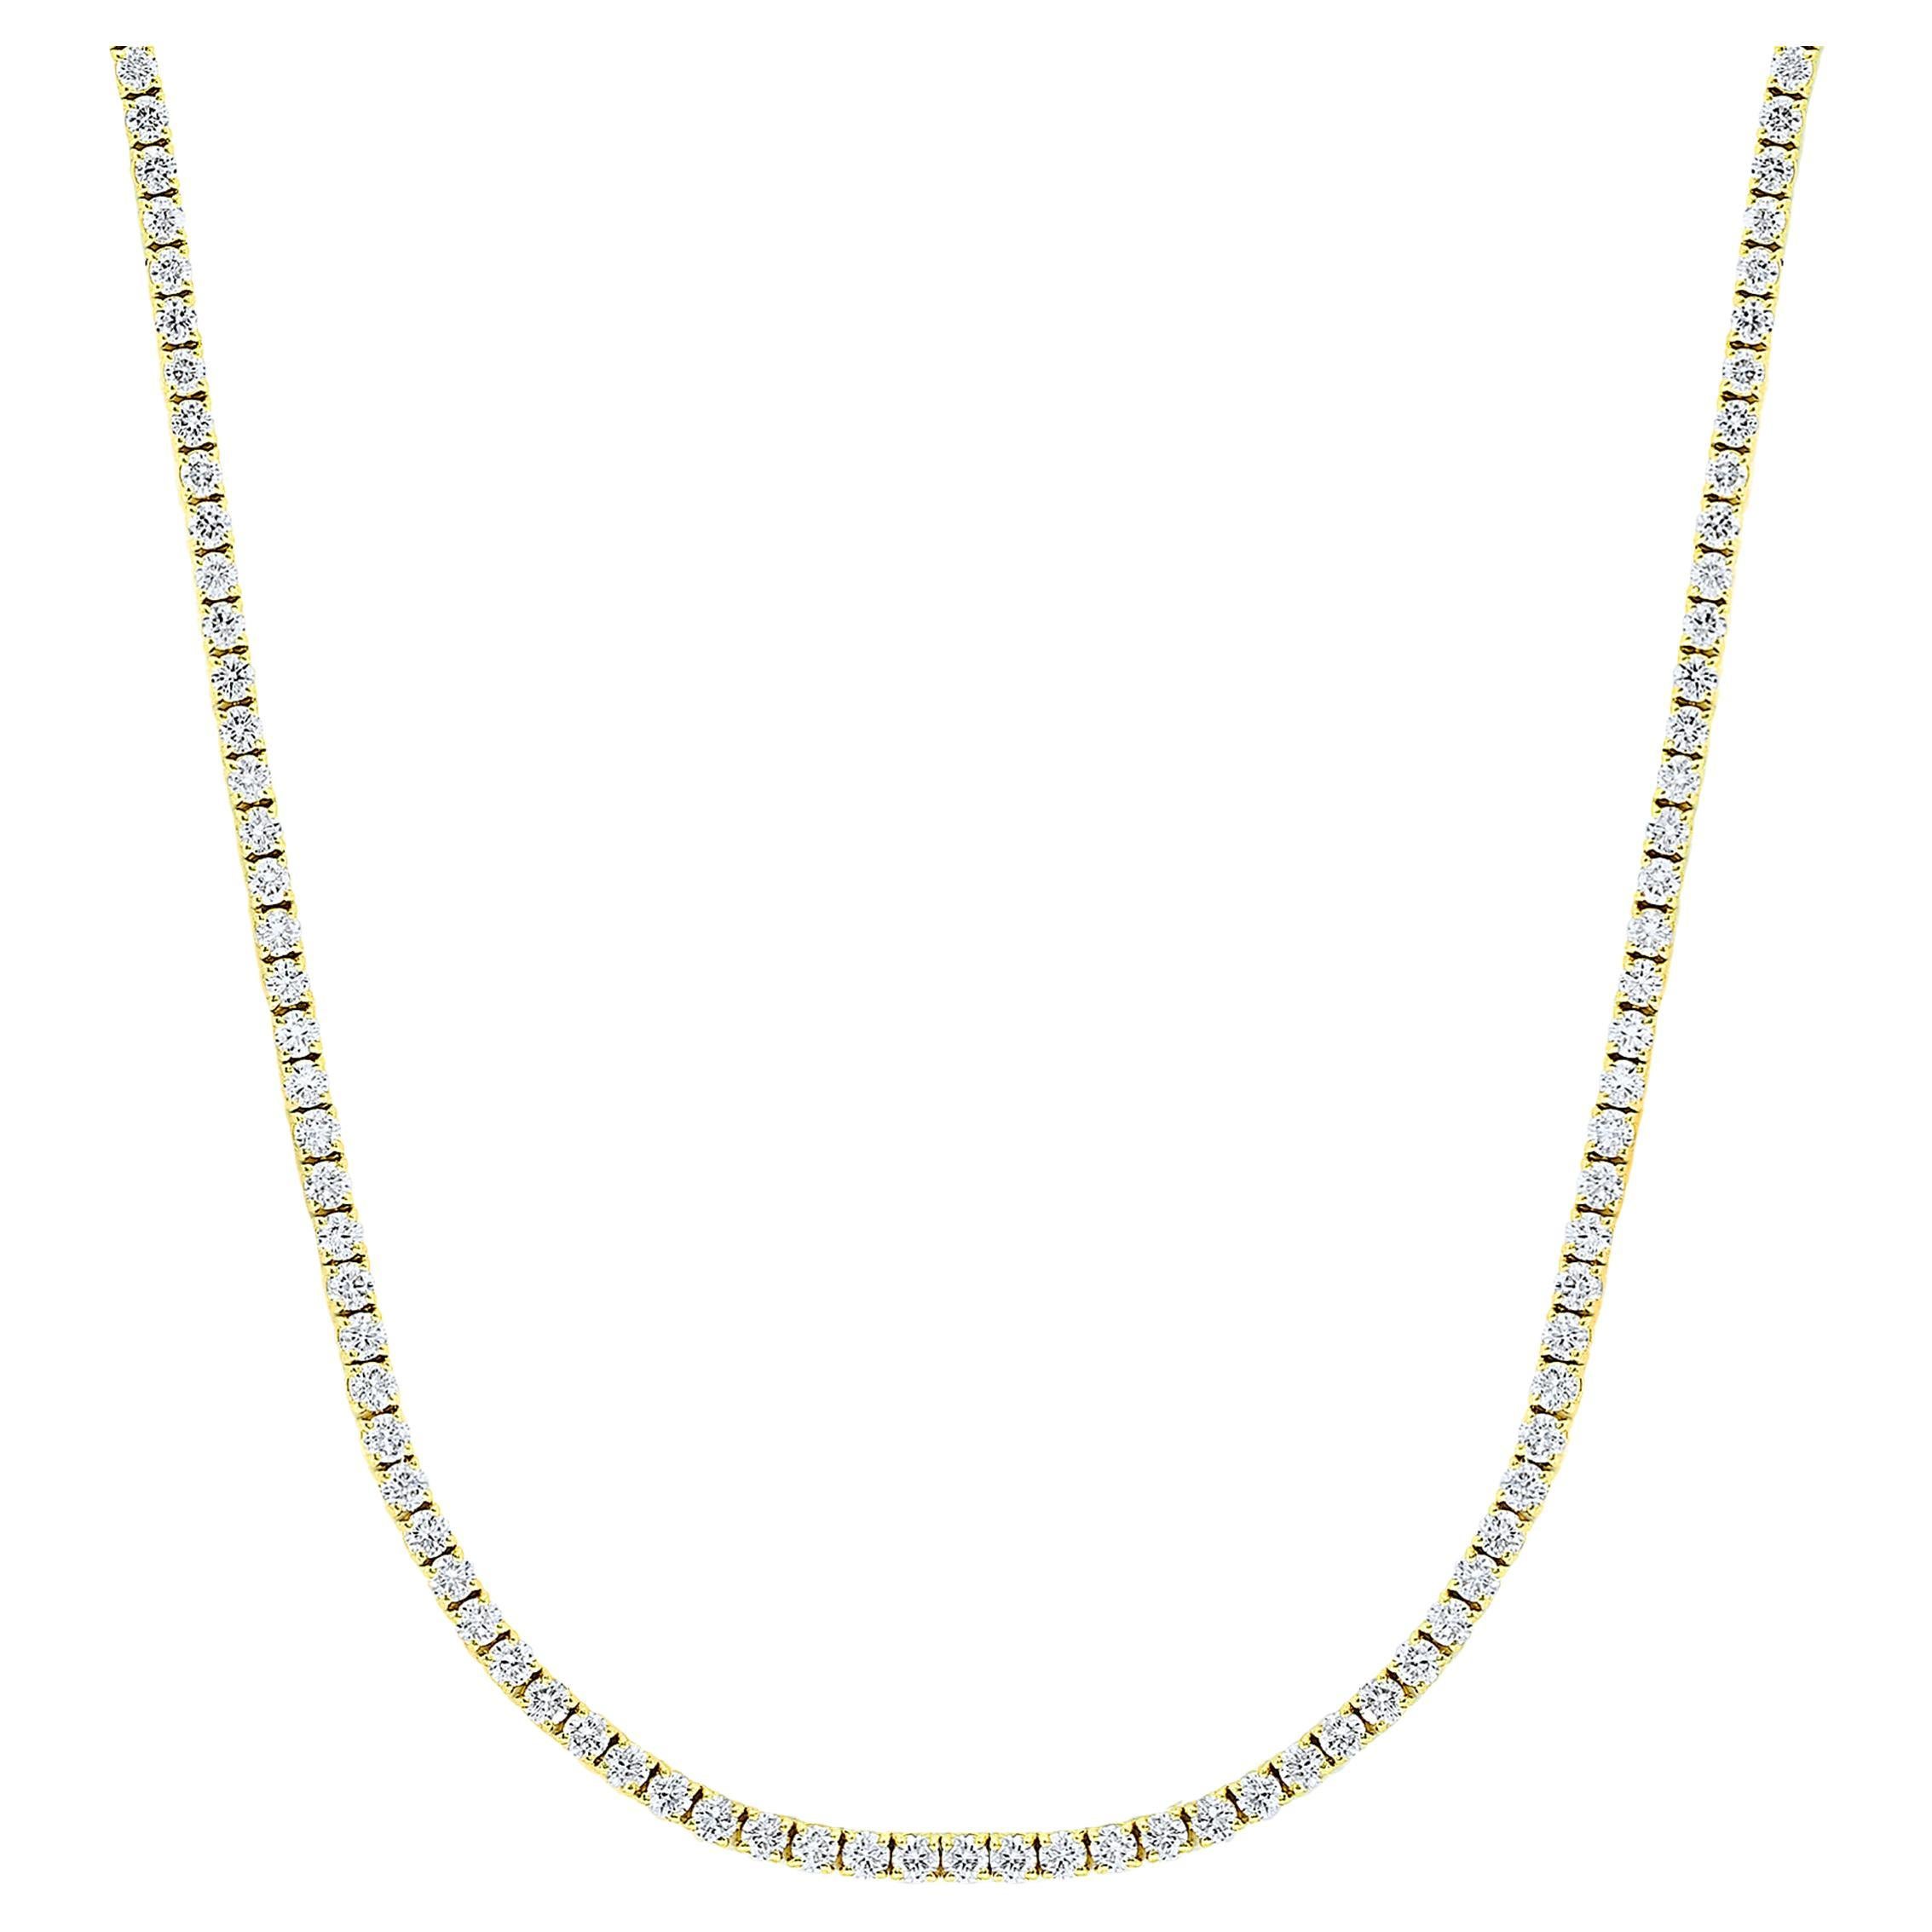 11.31 Carat Diamond Tennis Necklace in 14K Yellow Gold